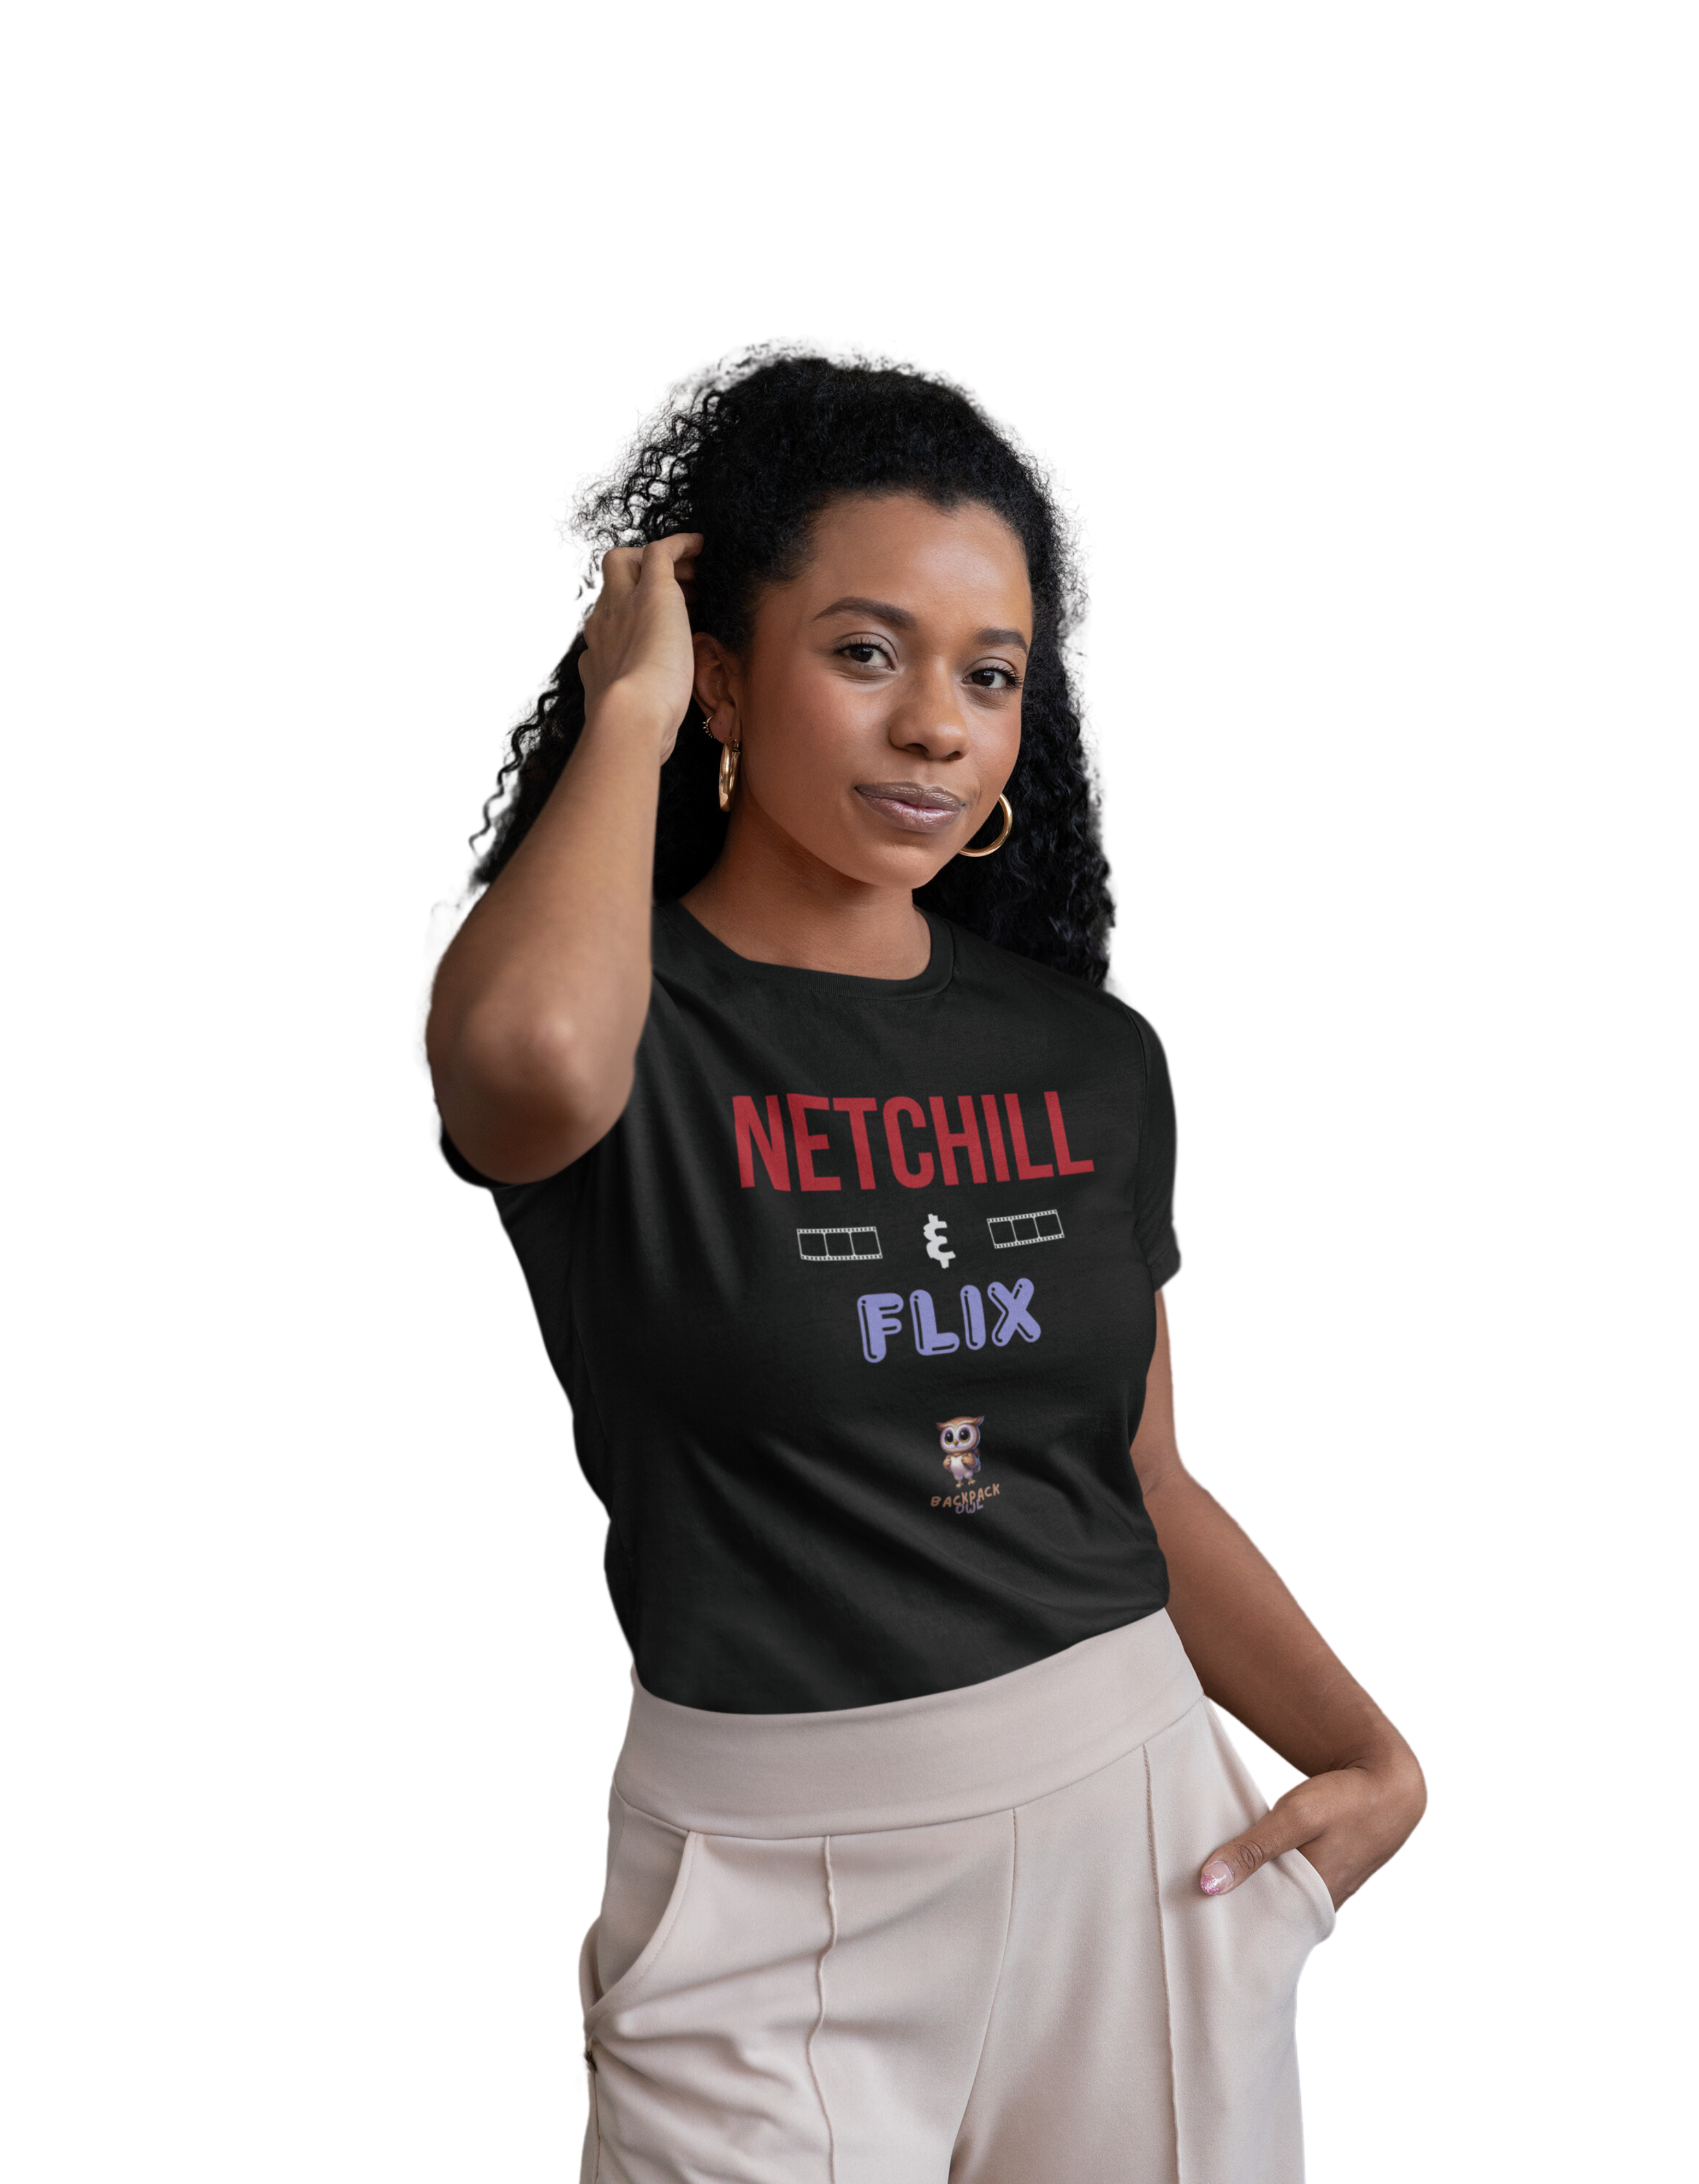 Netchill &amp; Flix - Camiseta unisex de estilo suave